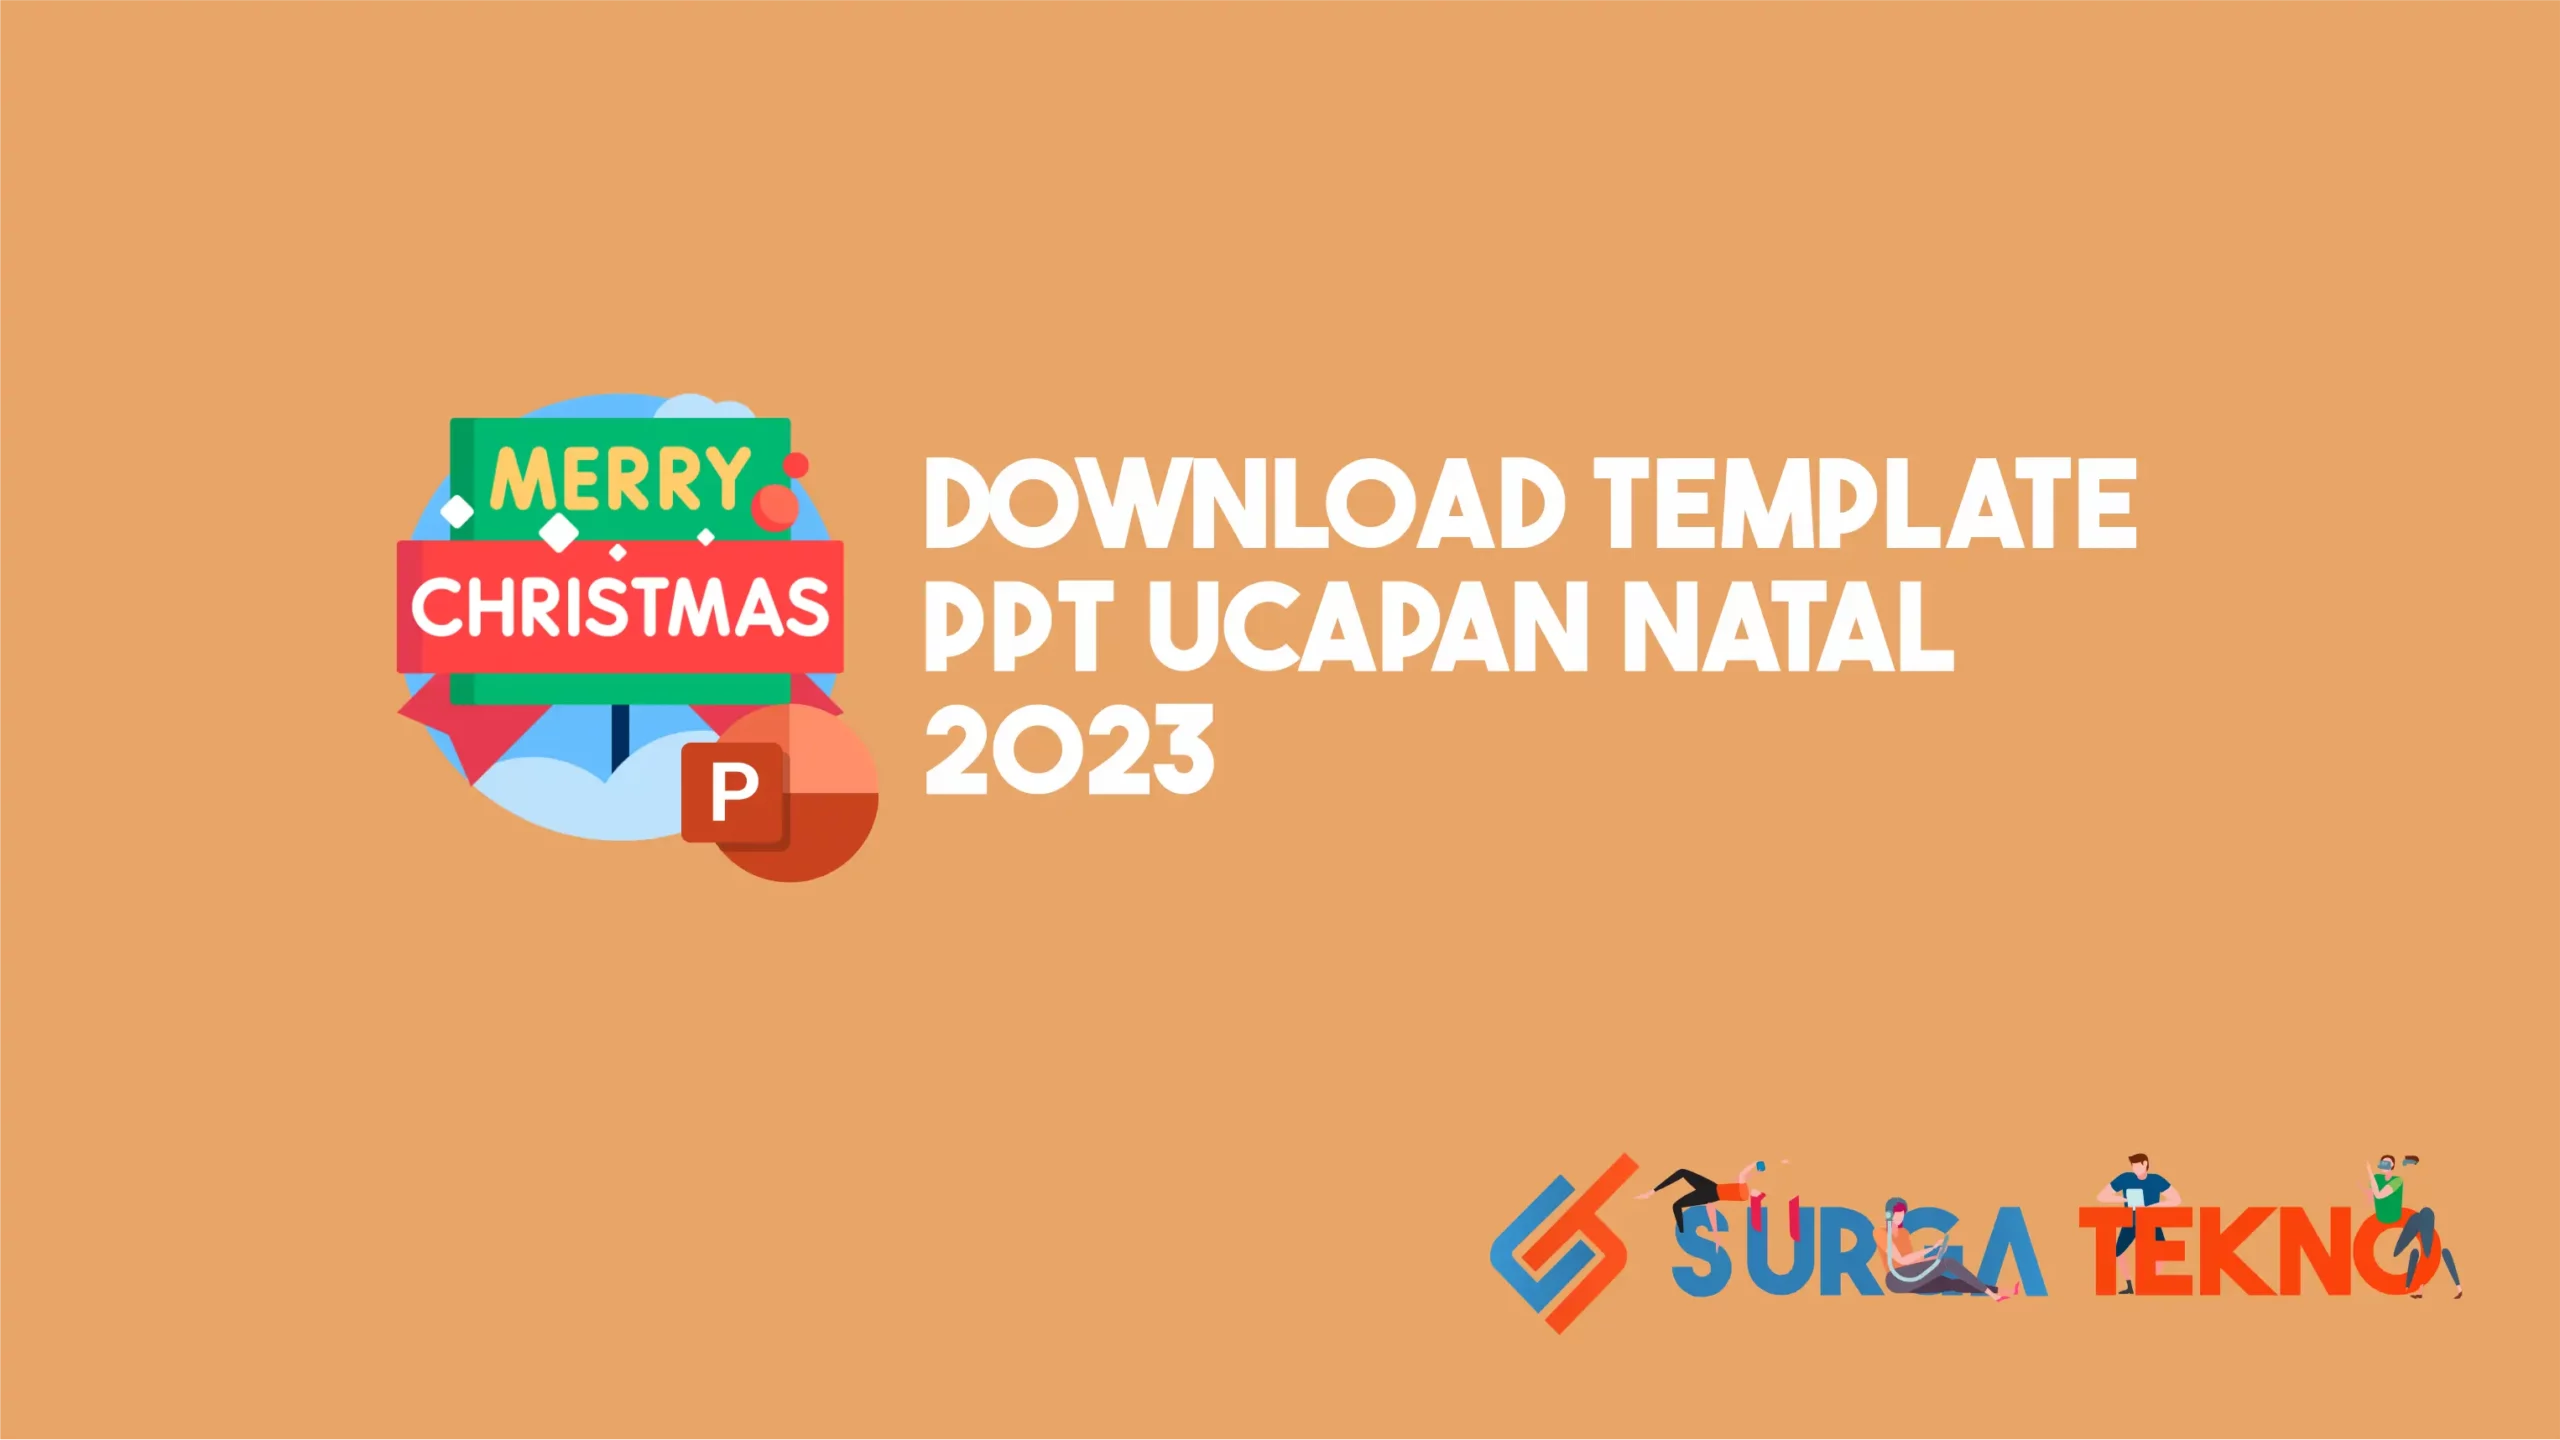 Download Template PPT Ucapan Natal 2023